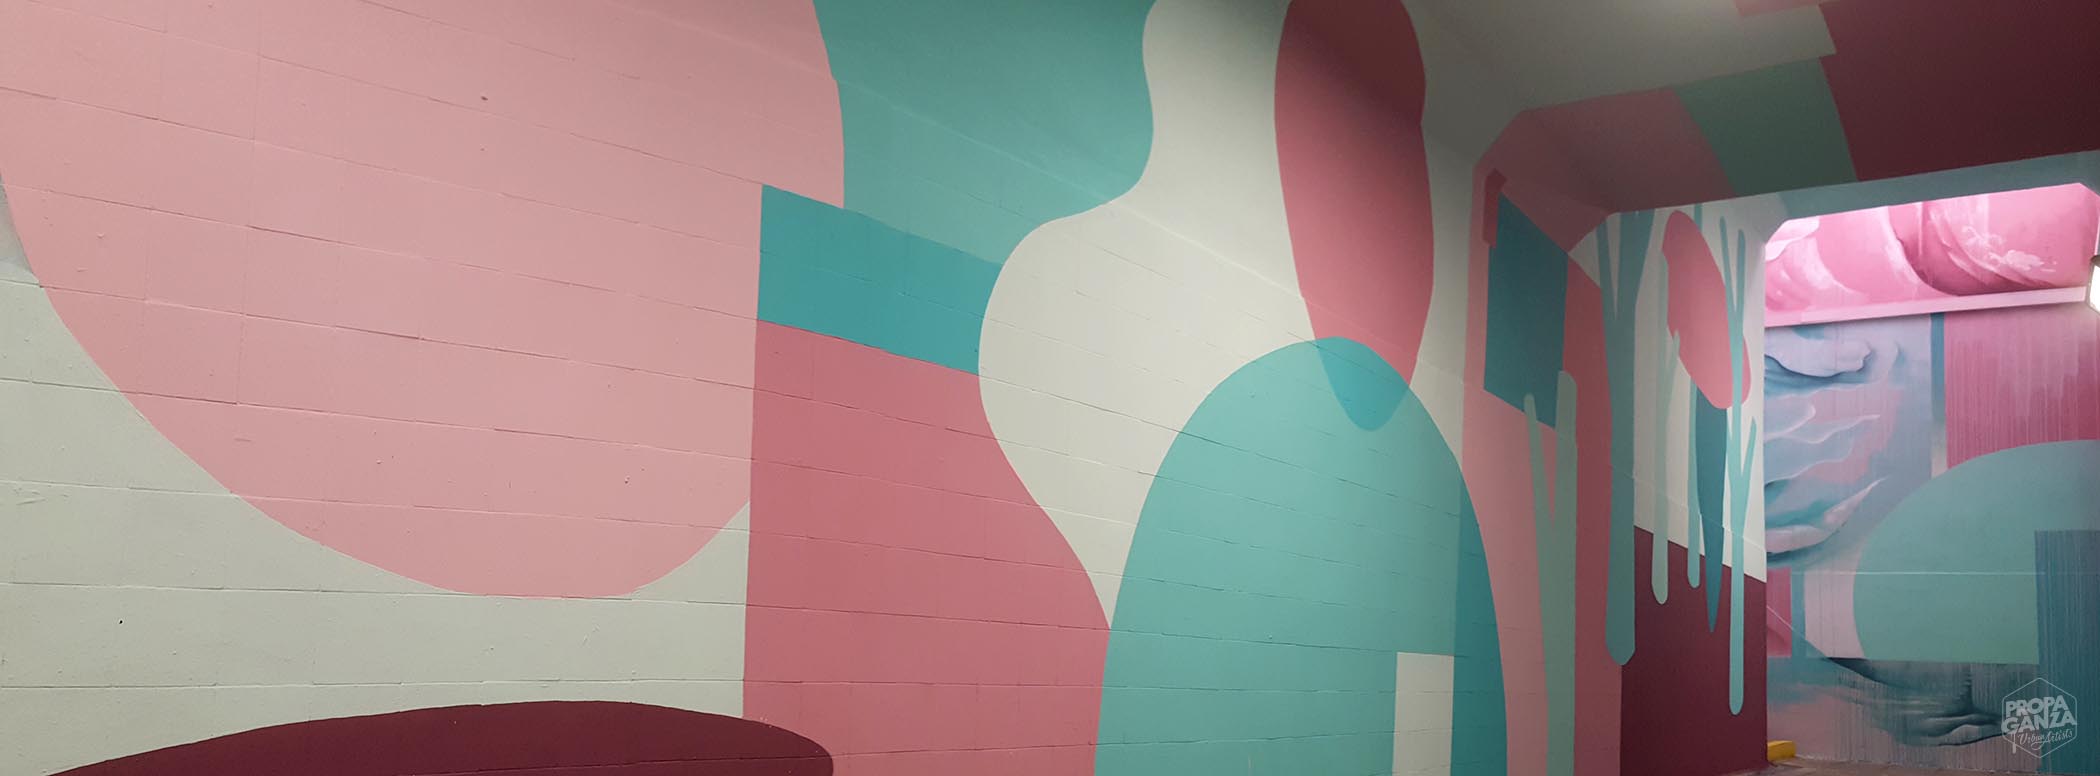 https://www.propaganza.be/wp-content/uploads/2019/04/adrien-roubens-abstract-paint-graffiti-street-art-vegetal-wave-tunnel-propaganza-hendlisz-pink-sixties-60-contemporary-2.jpg